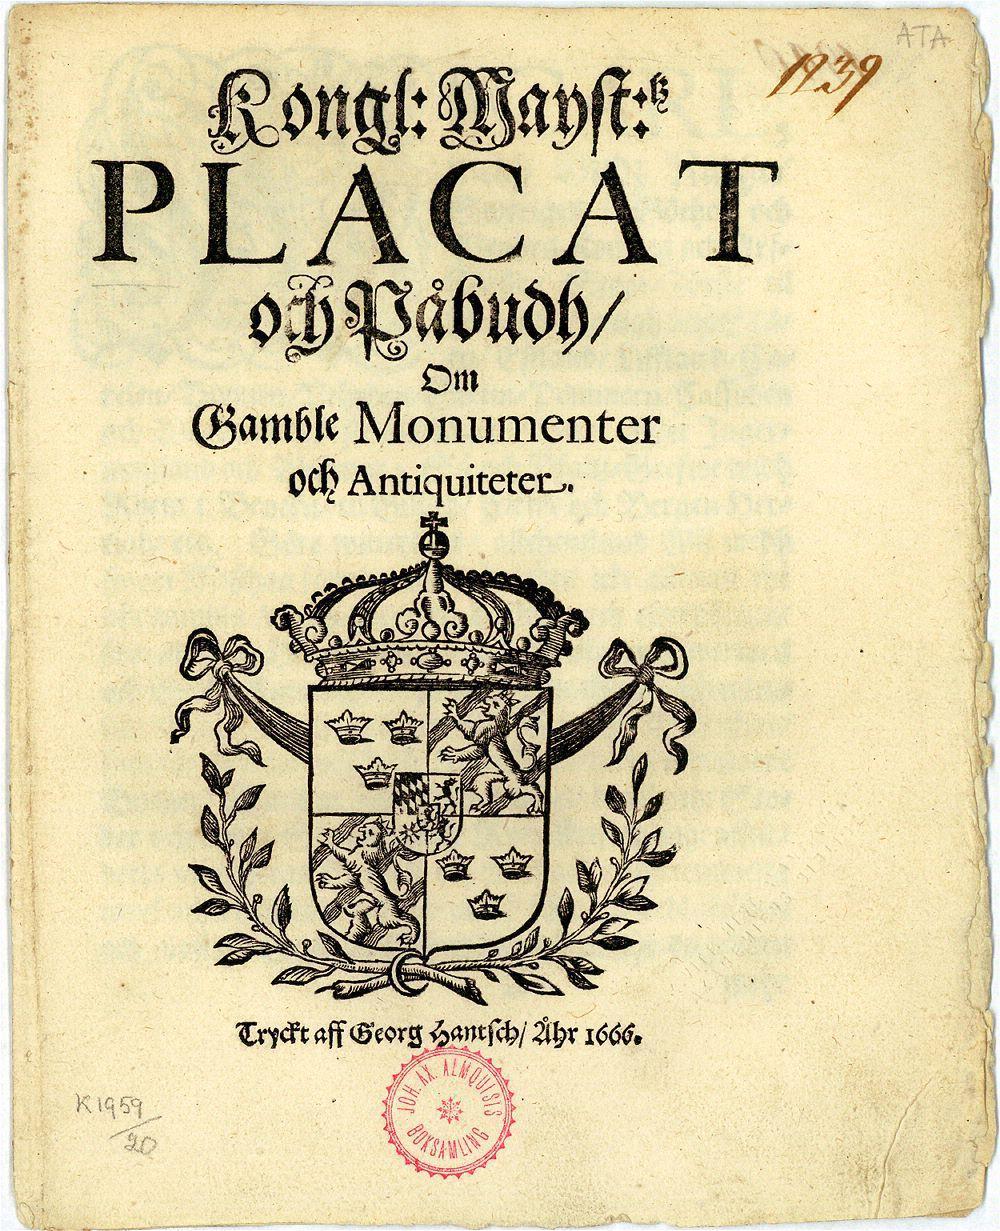 I muinsuskaitseseadus maailmas 1666 Karl XI regendi Hedvig Eleanora plakat Placat och påbudh om gamble